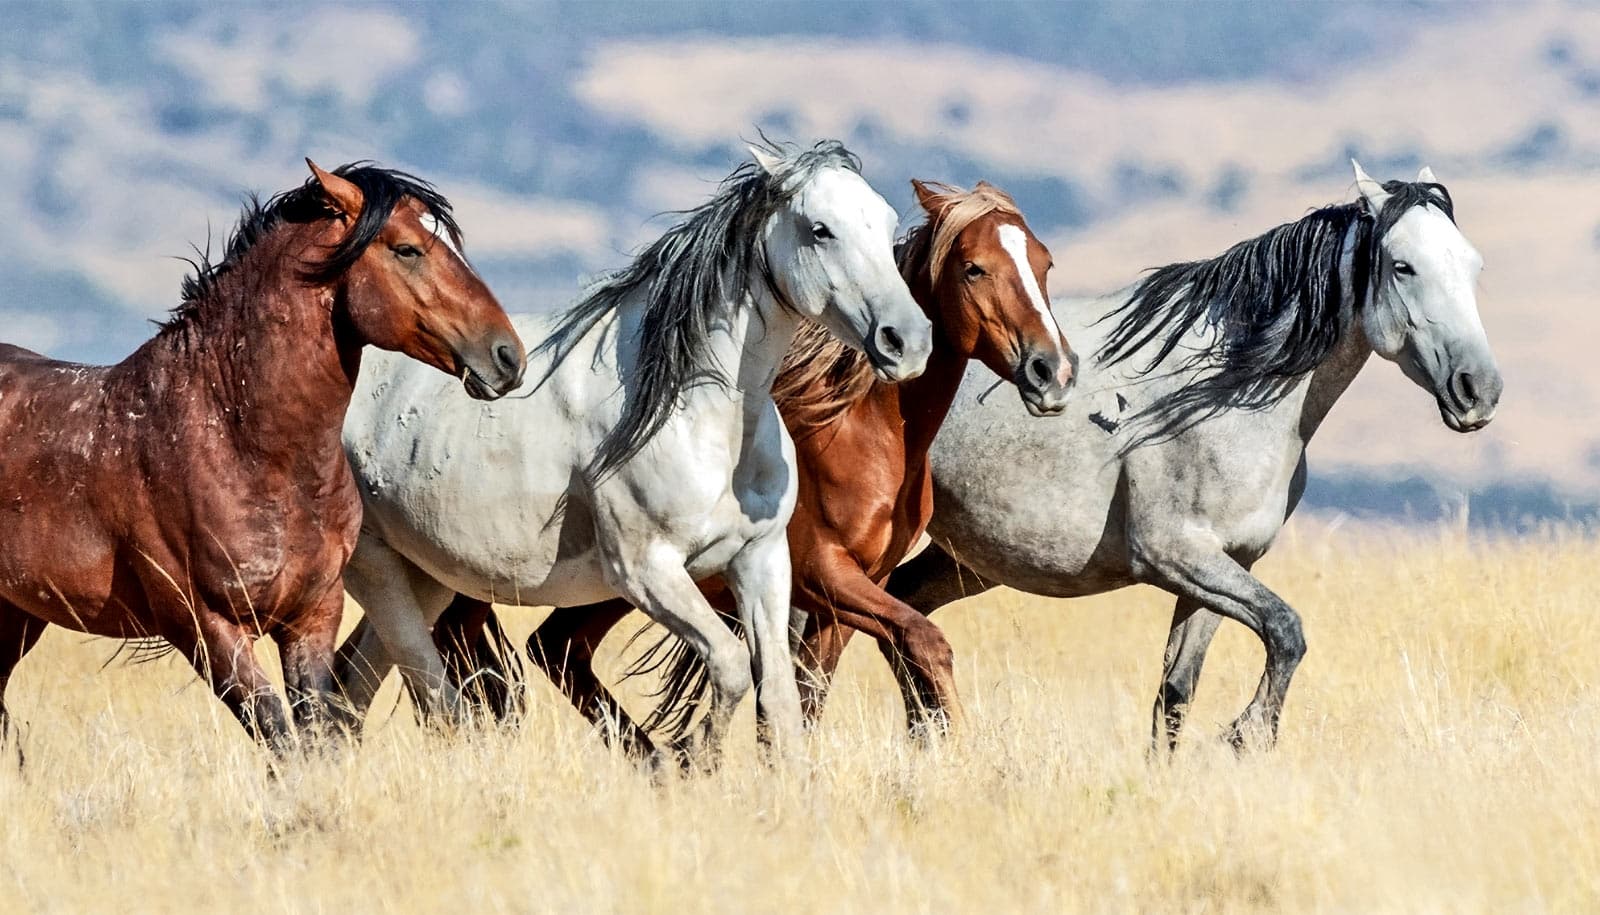 Four horses run through tall yellow grass on the plains.